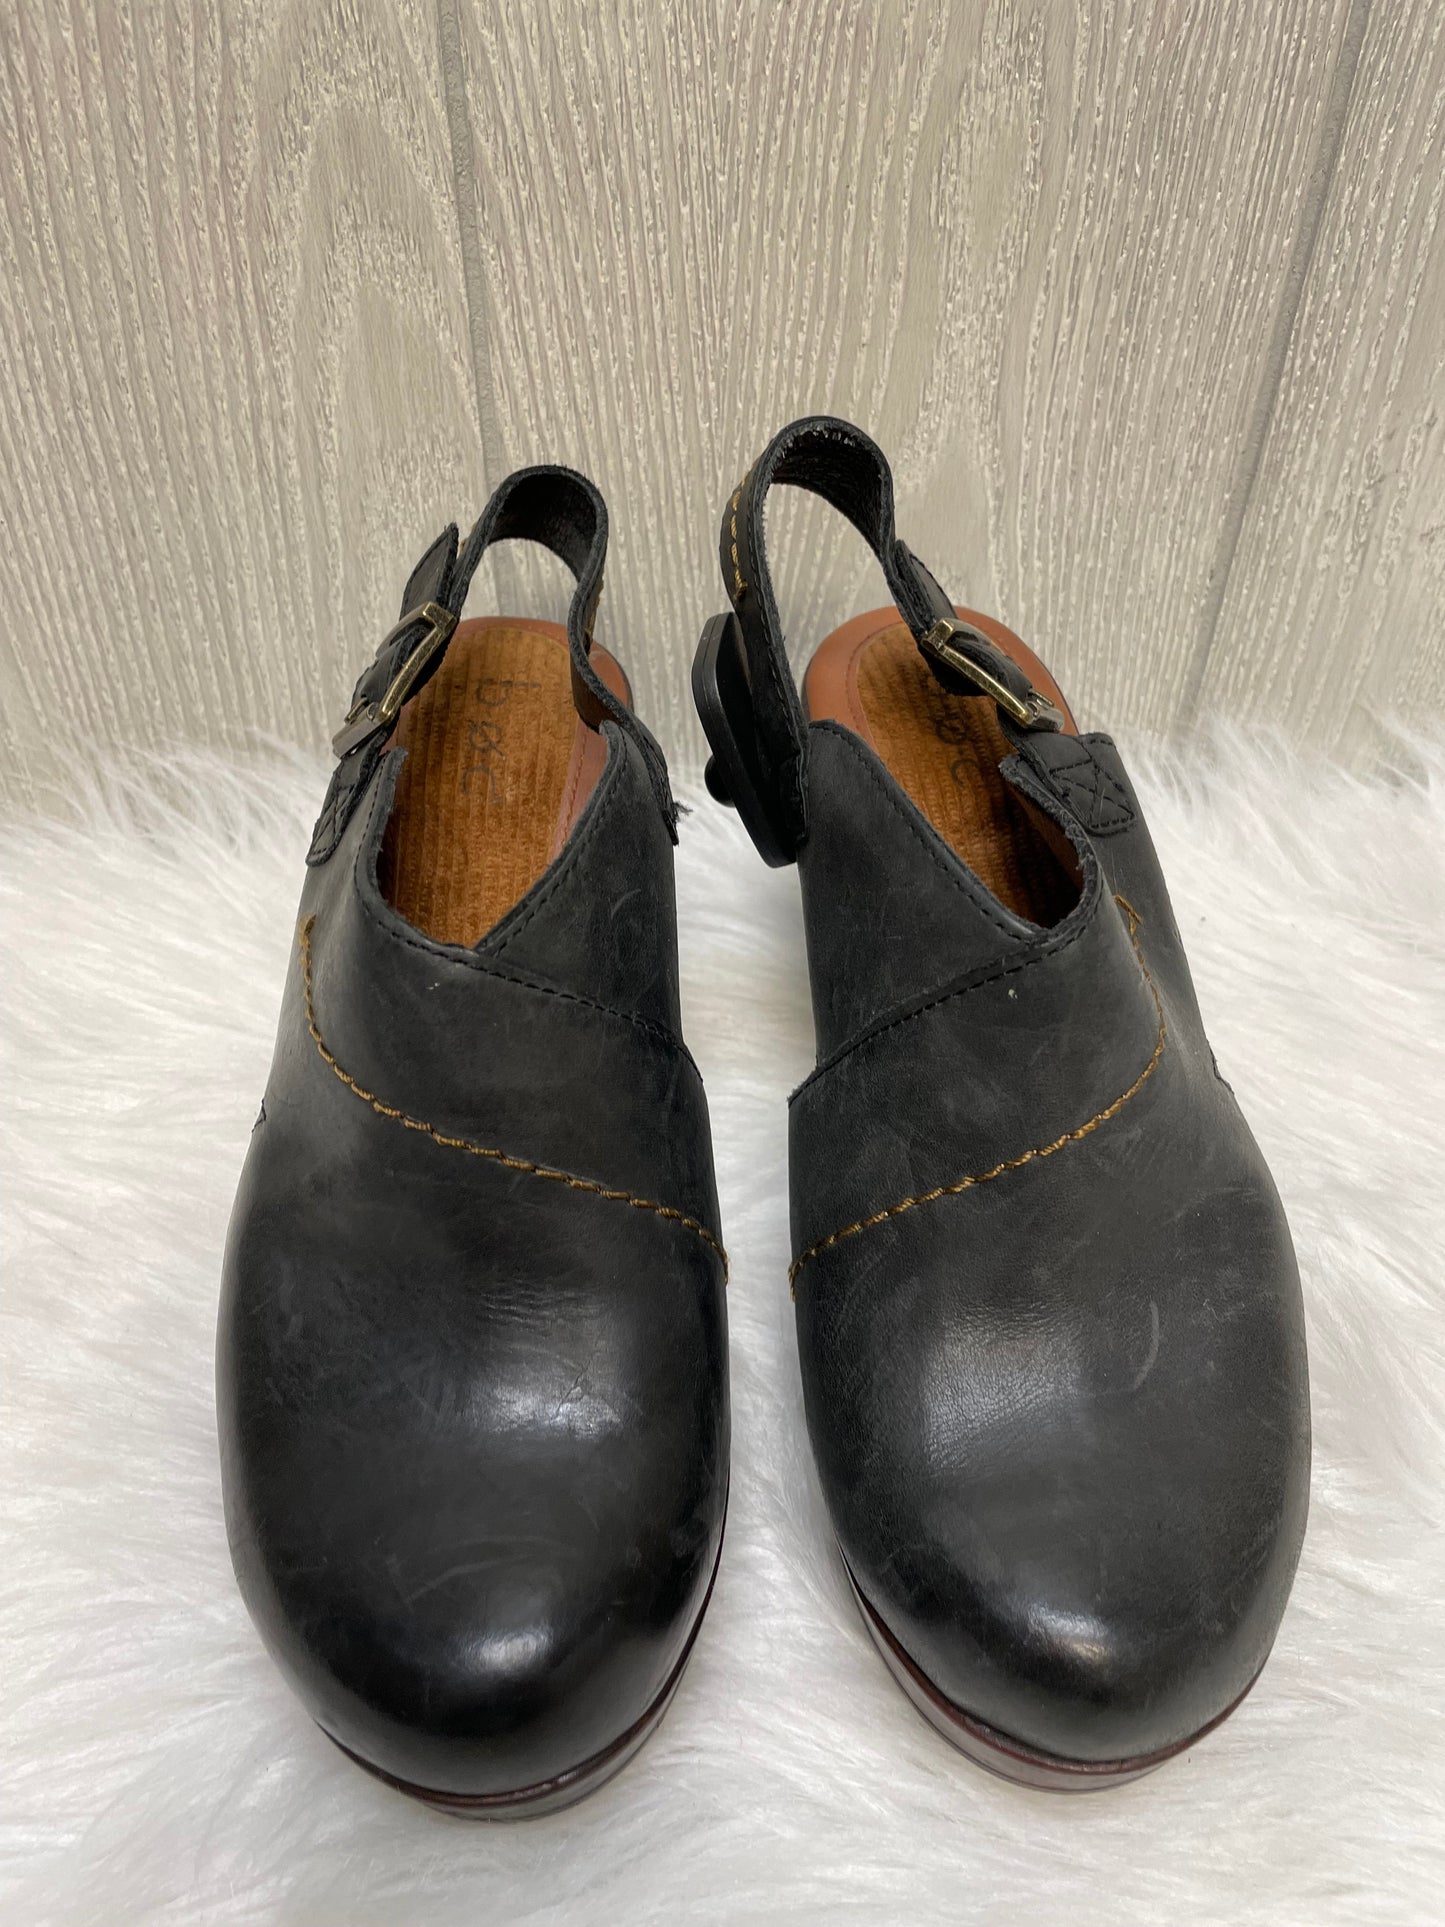 Black Shoes Heels Block Boc, Size 7